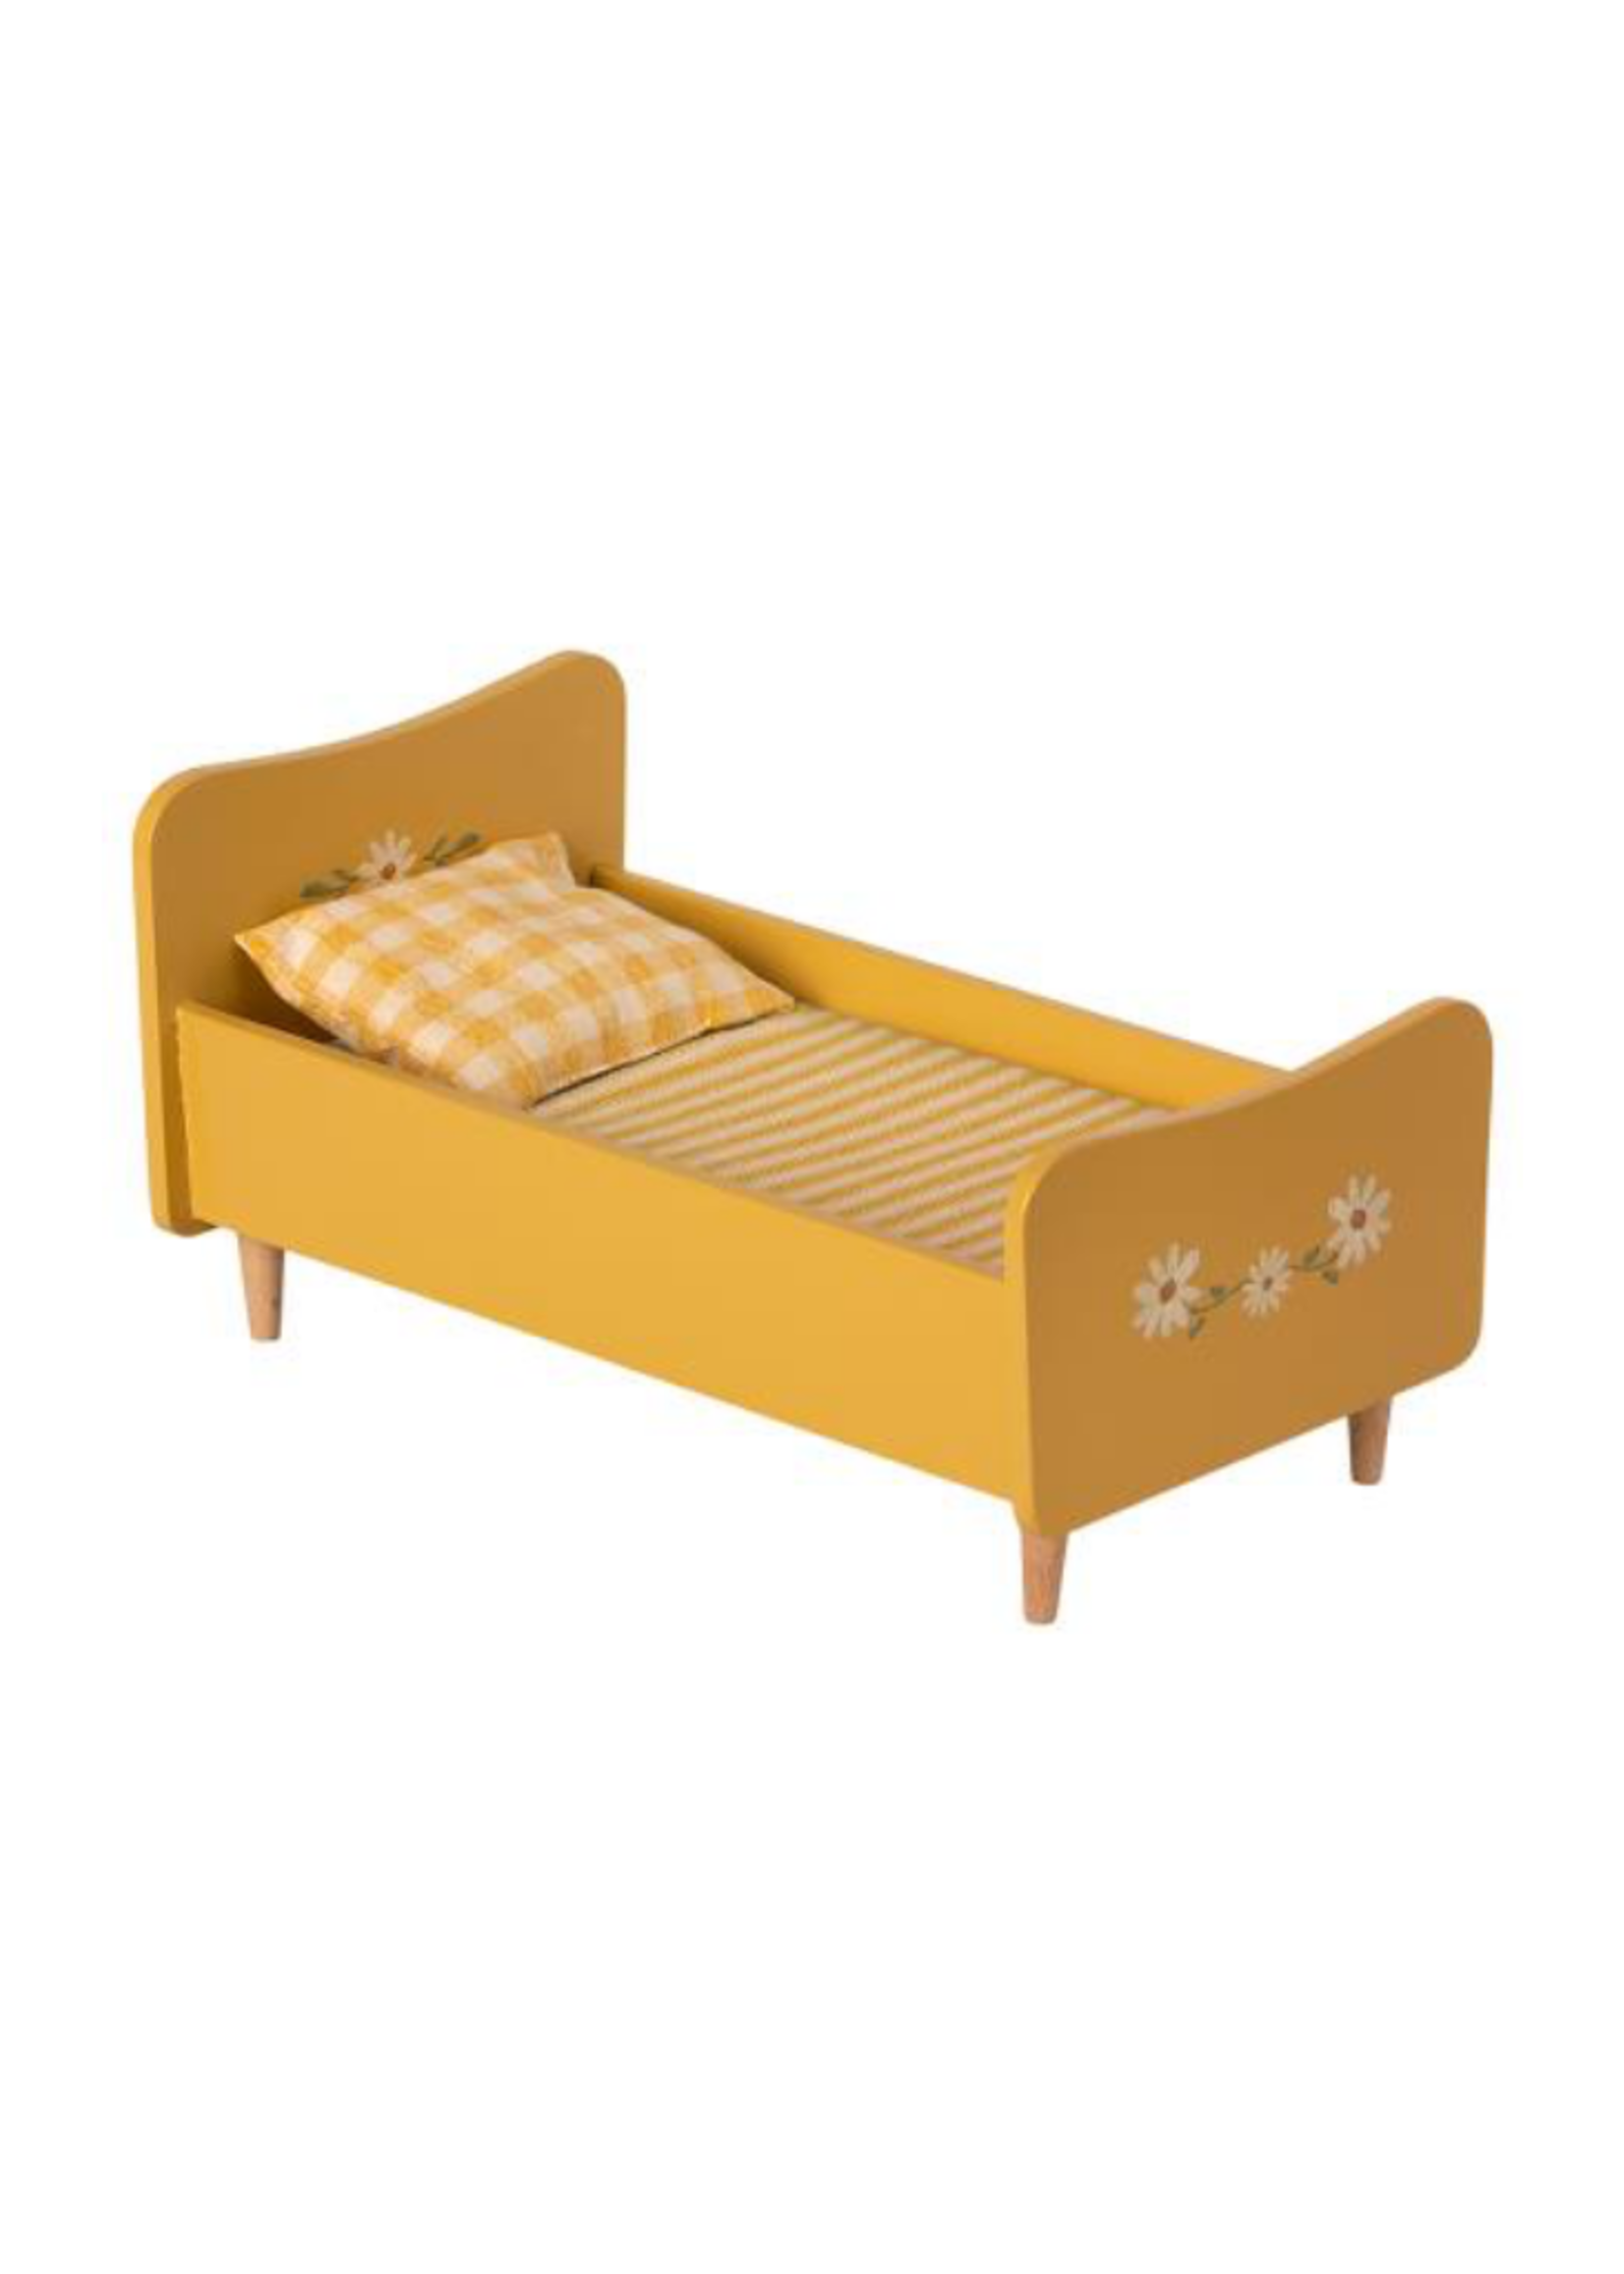 Maileg Wooden Bed, Mini - Yellow